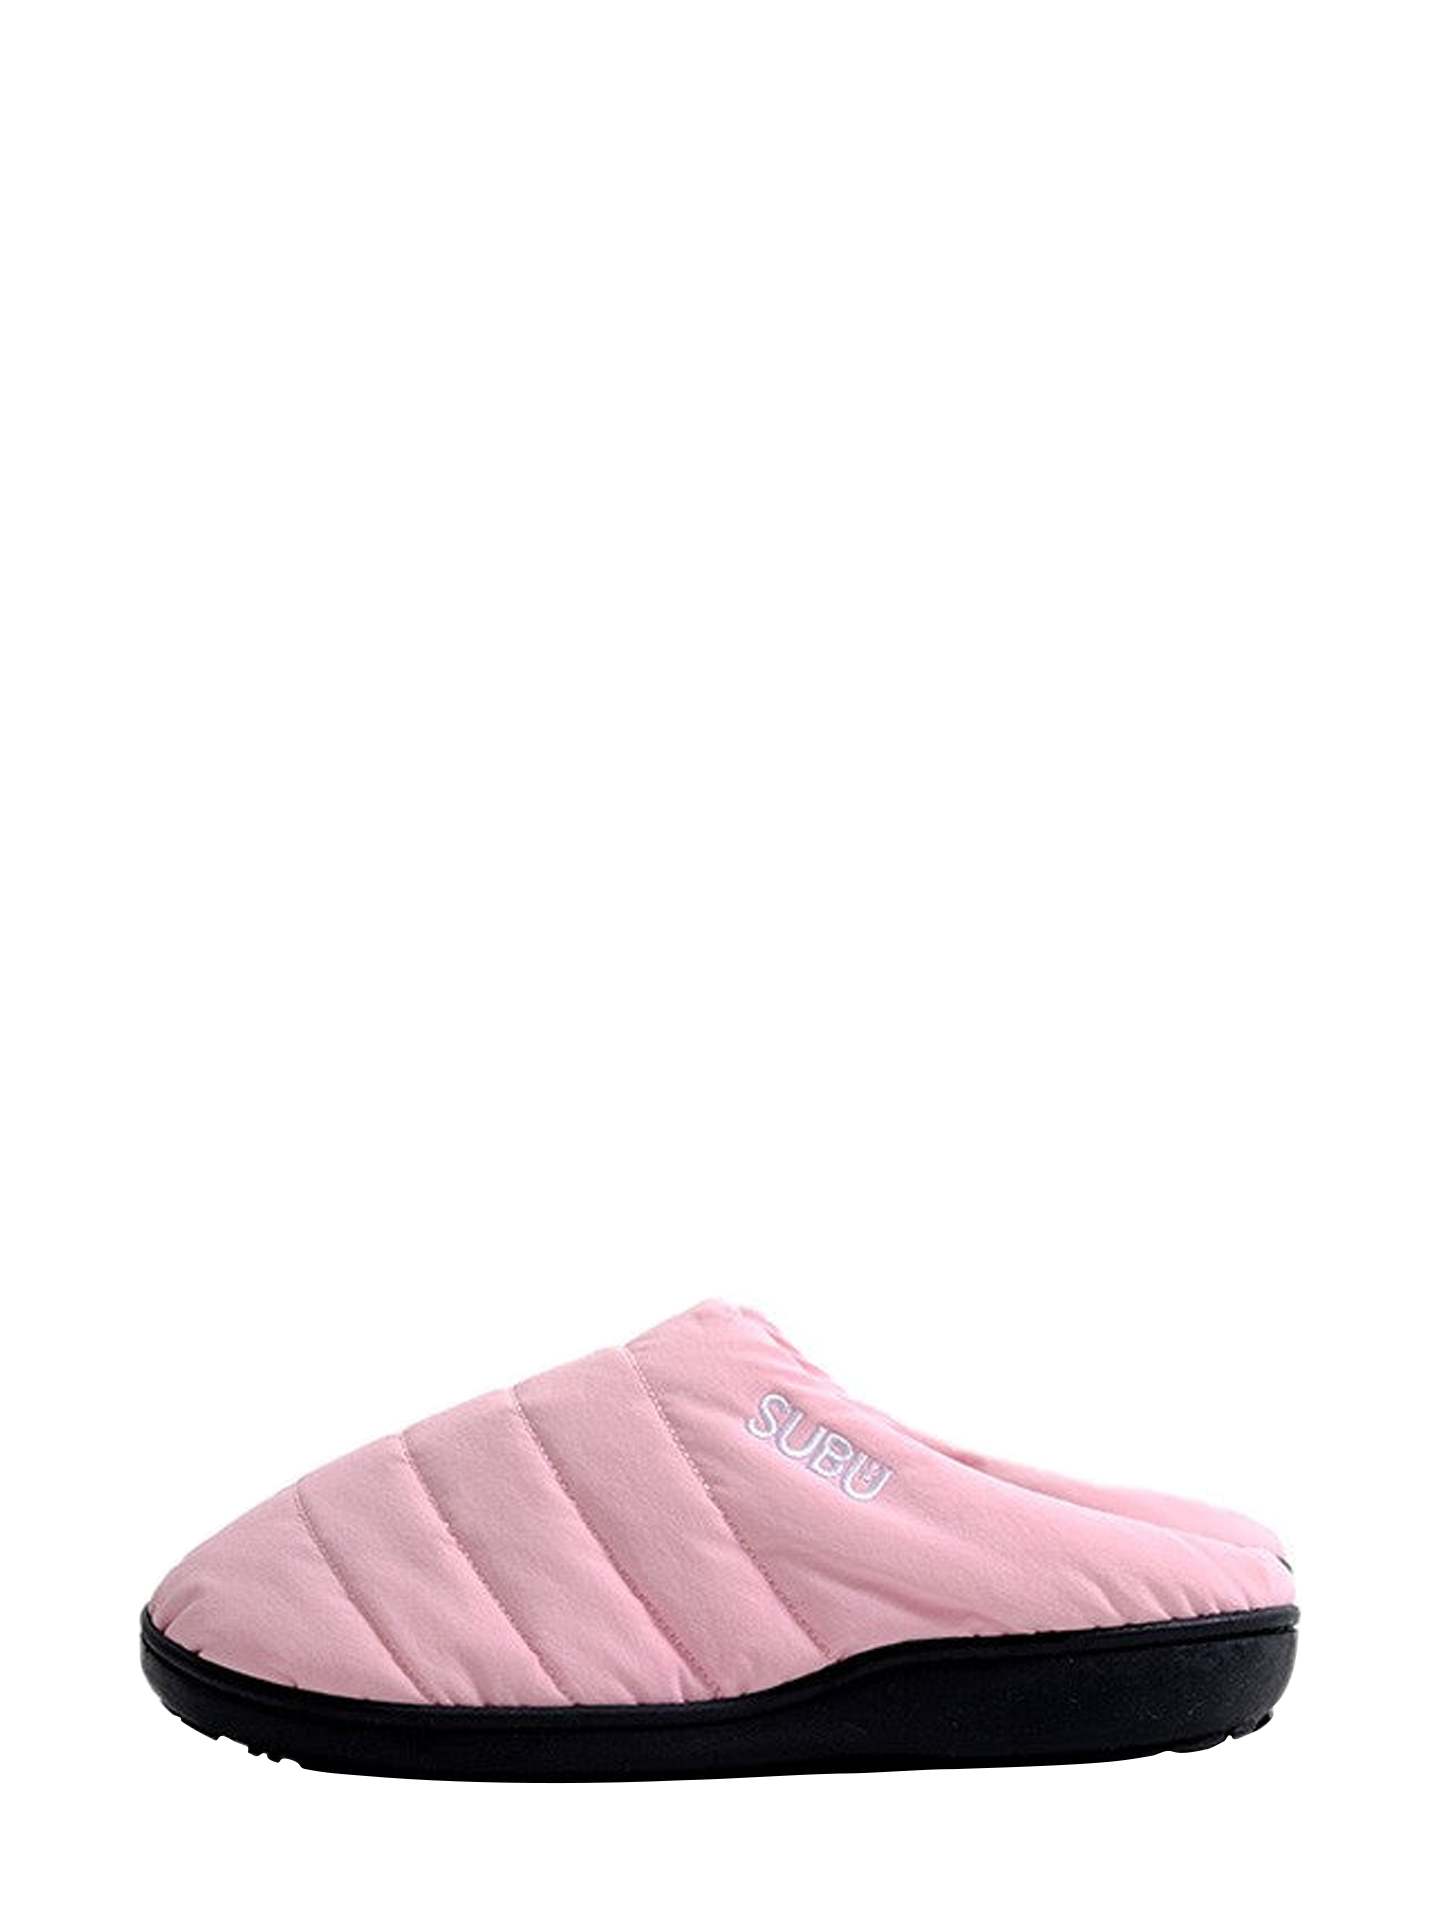 Subu classic puffer slippers, pink